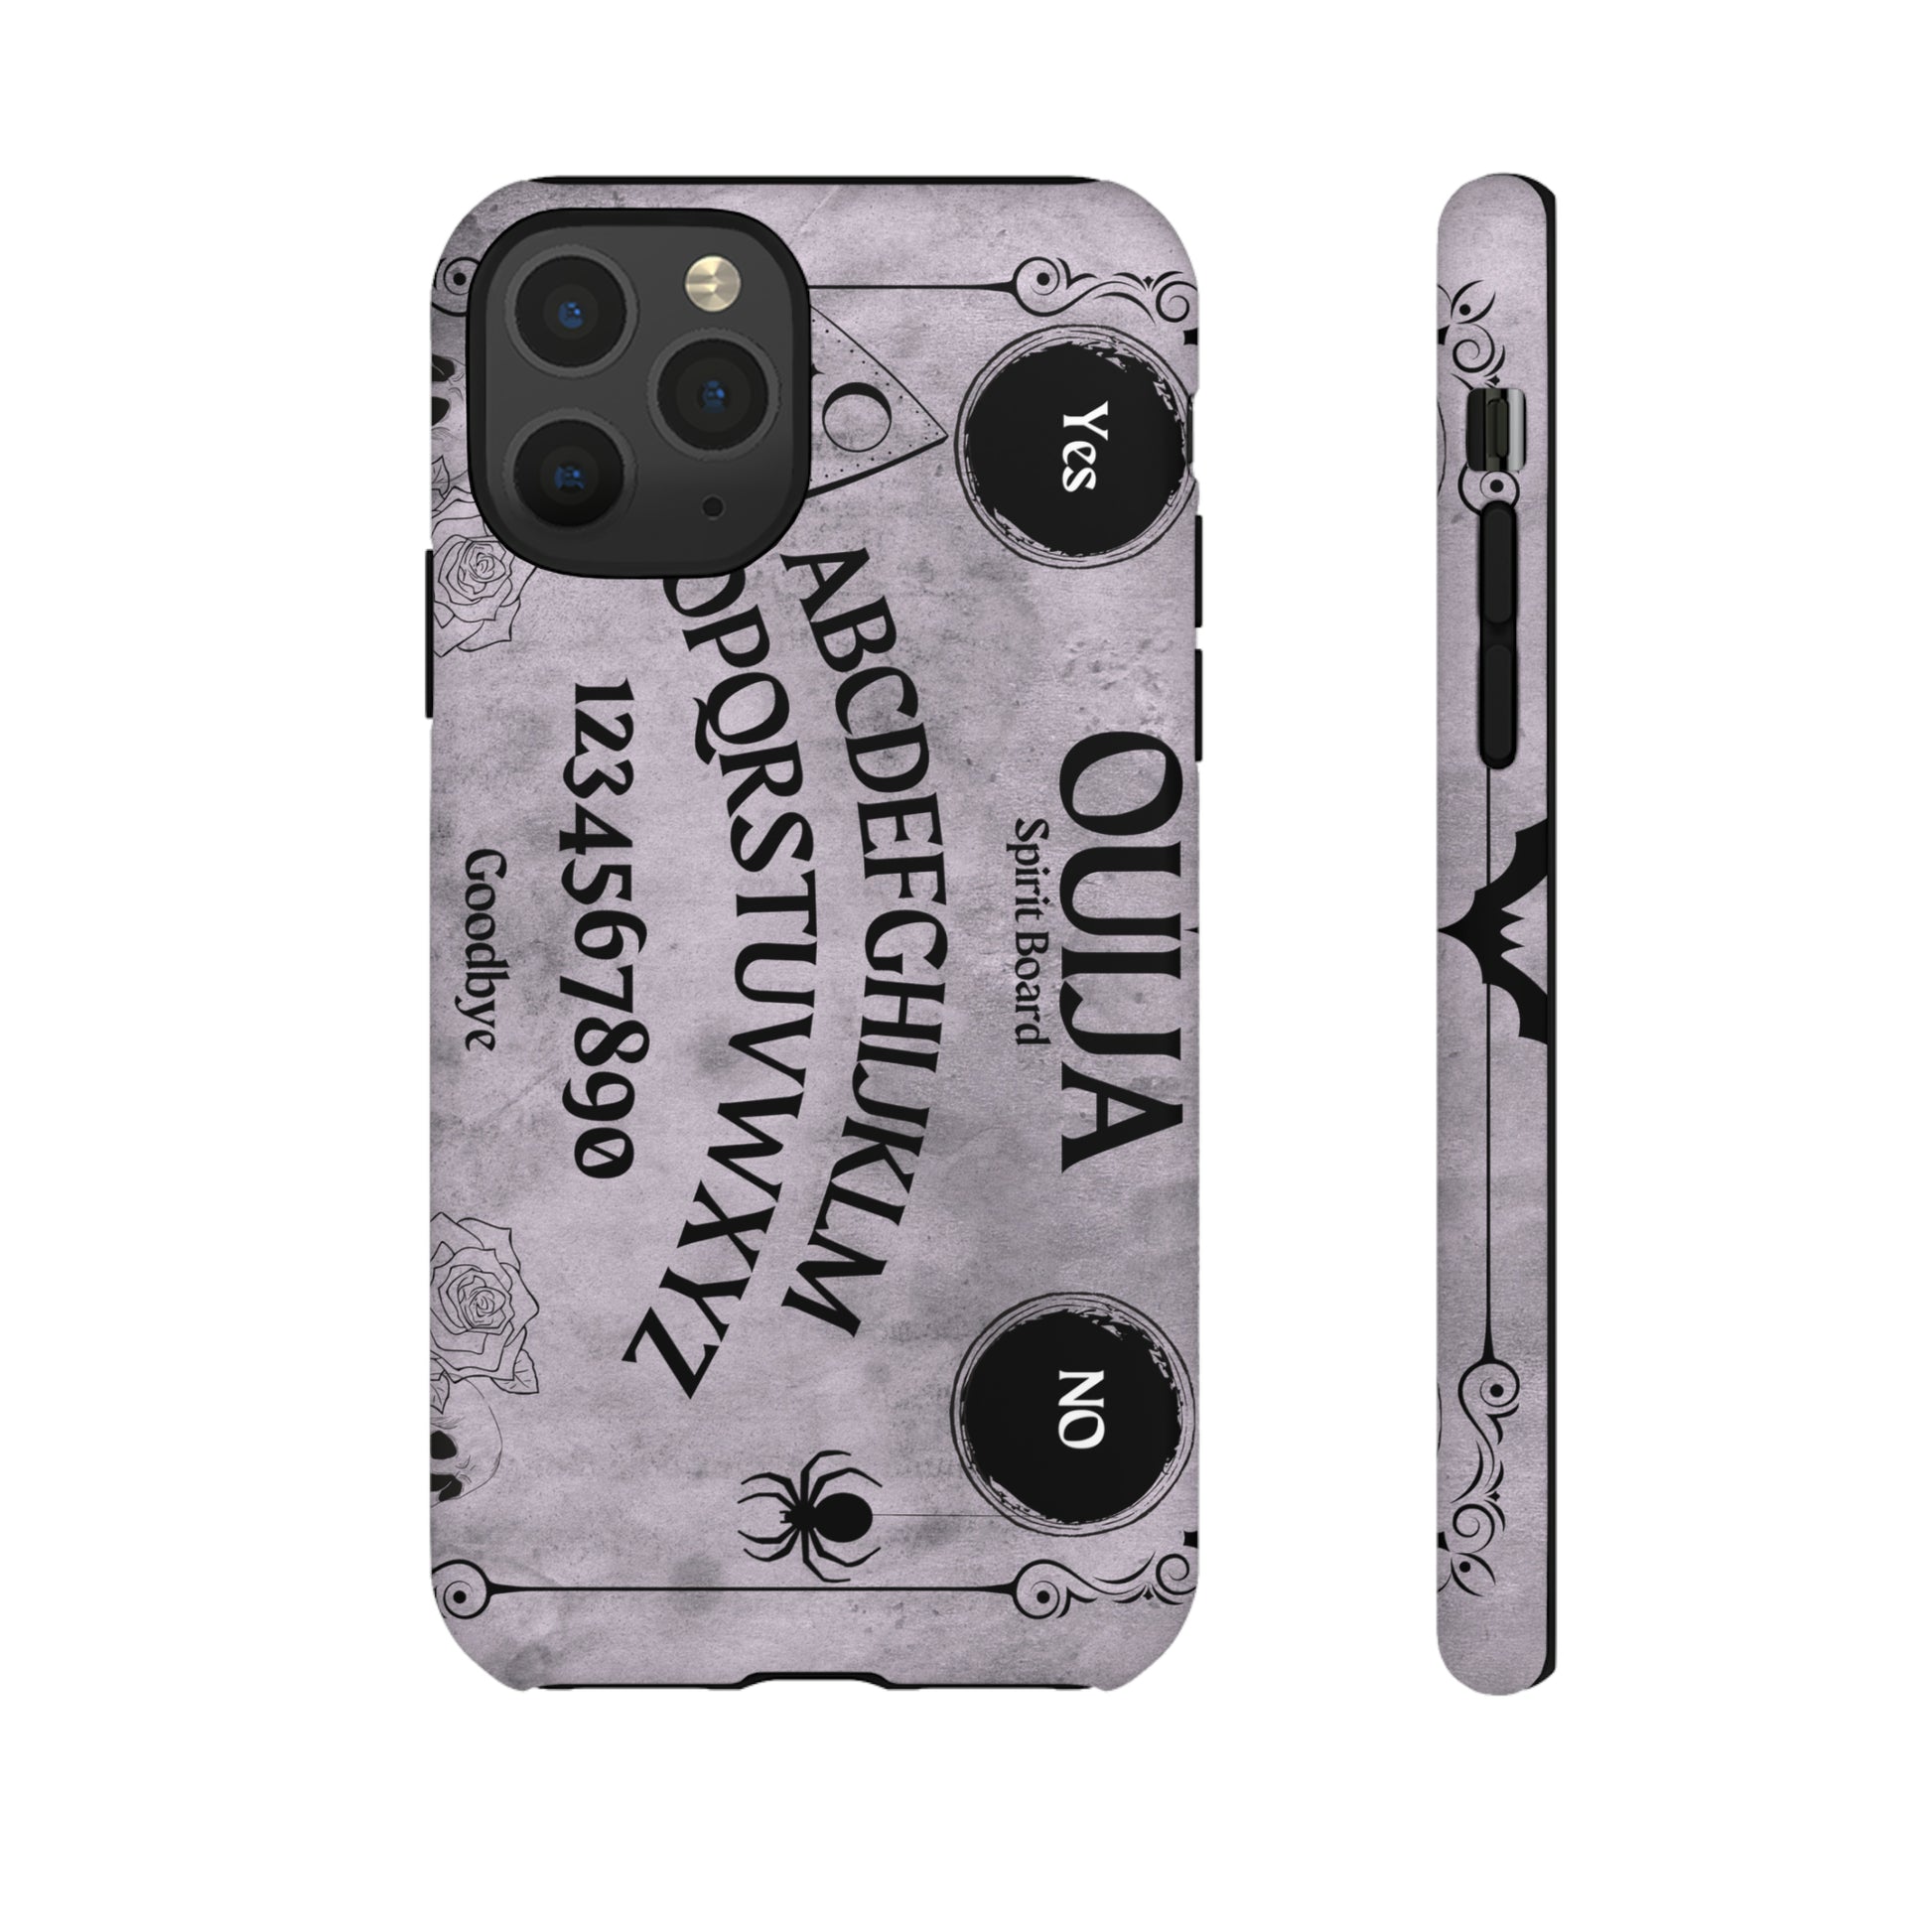 Ouija Board Tough Phone Cases For Samsung iPhone GooglePhone CaseVTZdesignsiPhone 11 ProMatteAccessoriesGlossyhalloween